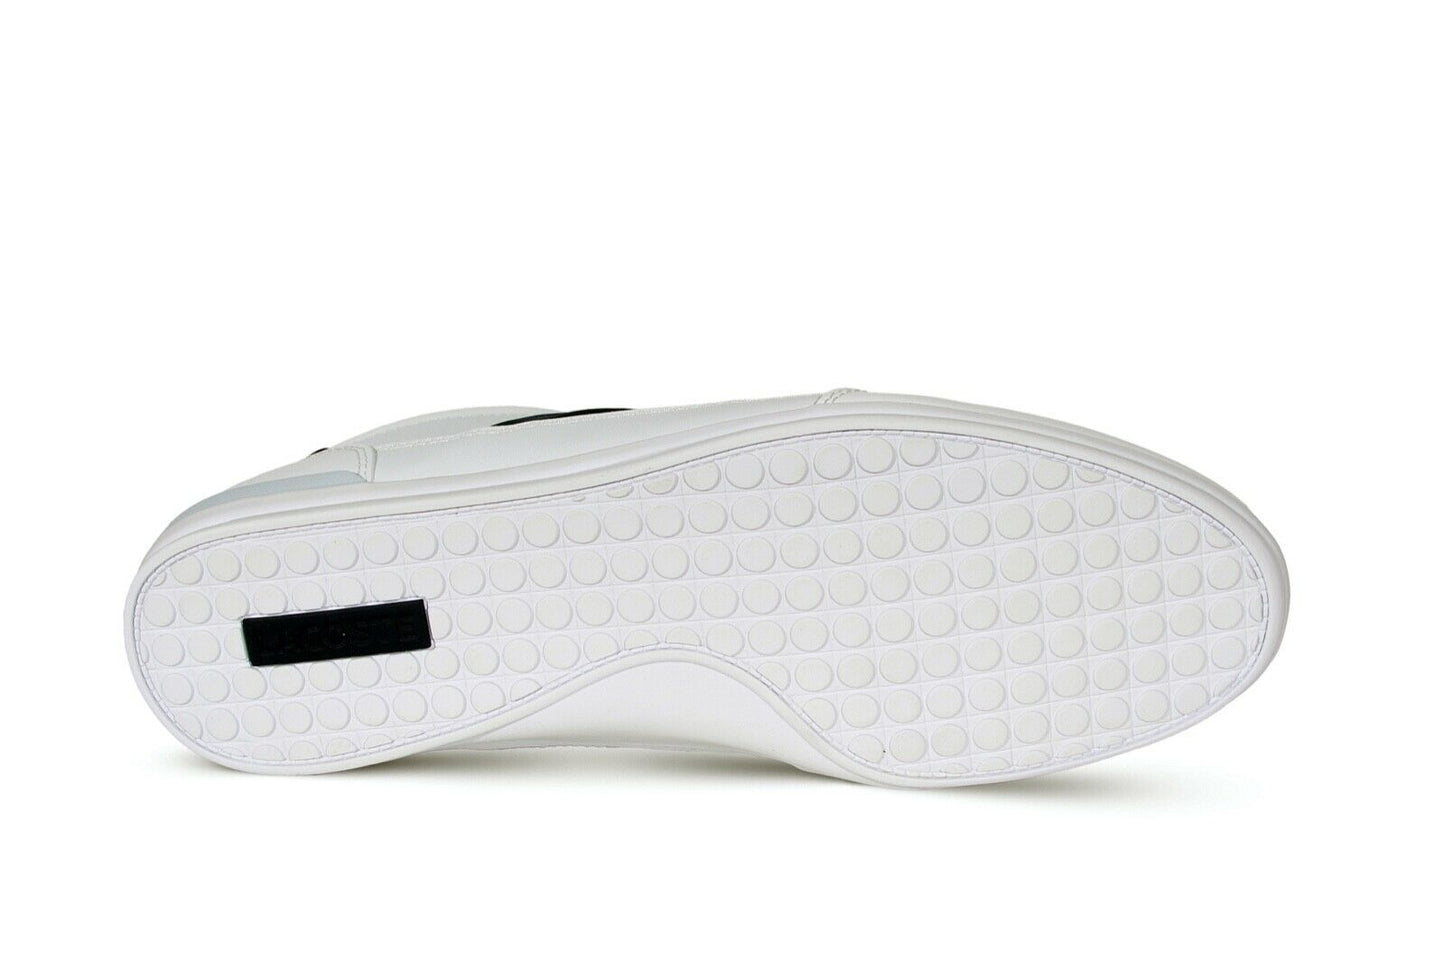 Lacoste Chaymon 0120 2 Men's Sneakers in White 7-40CMA0067 407